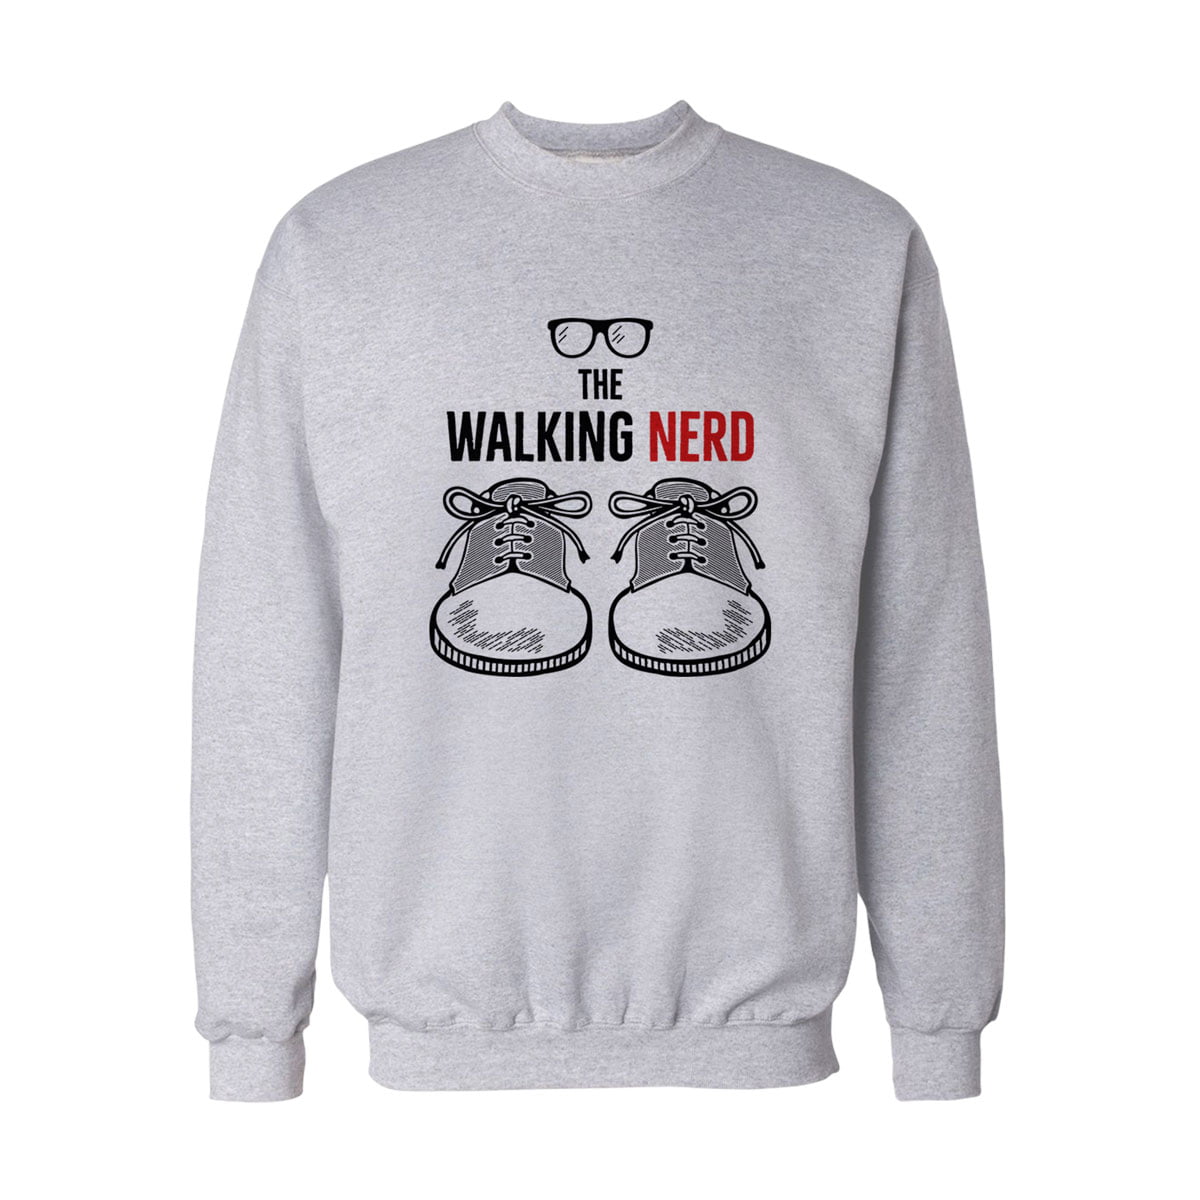 The walking nerd sweatshirt b - the walking nerd sweatshirt - figurex